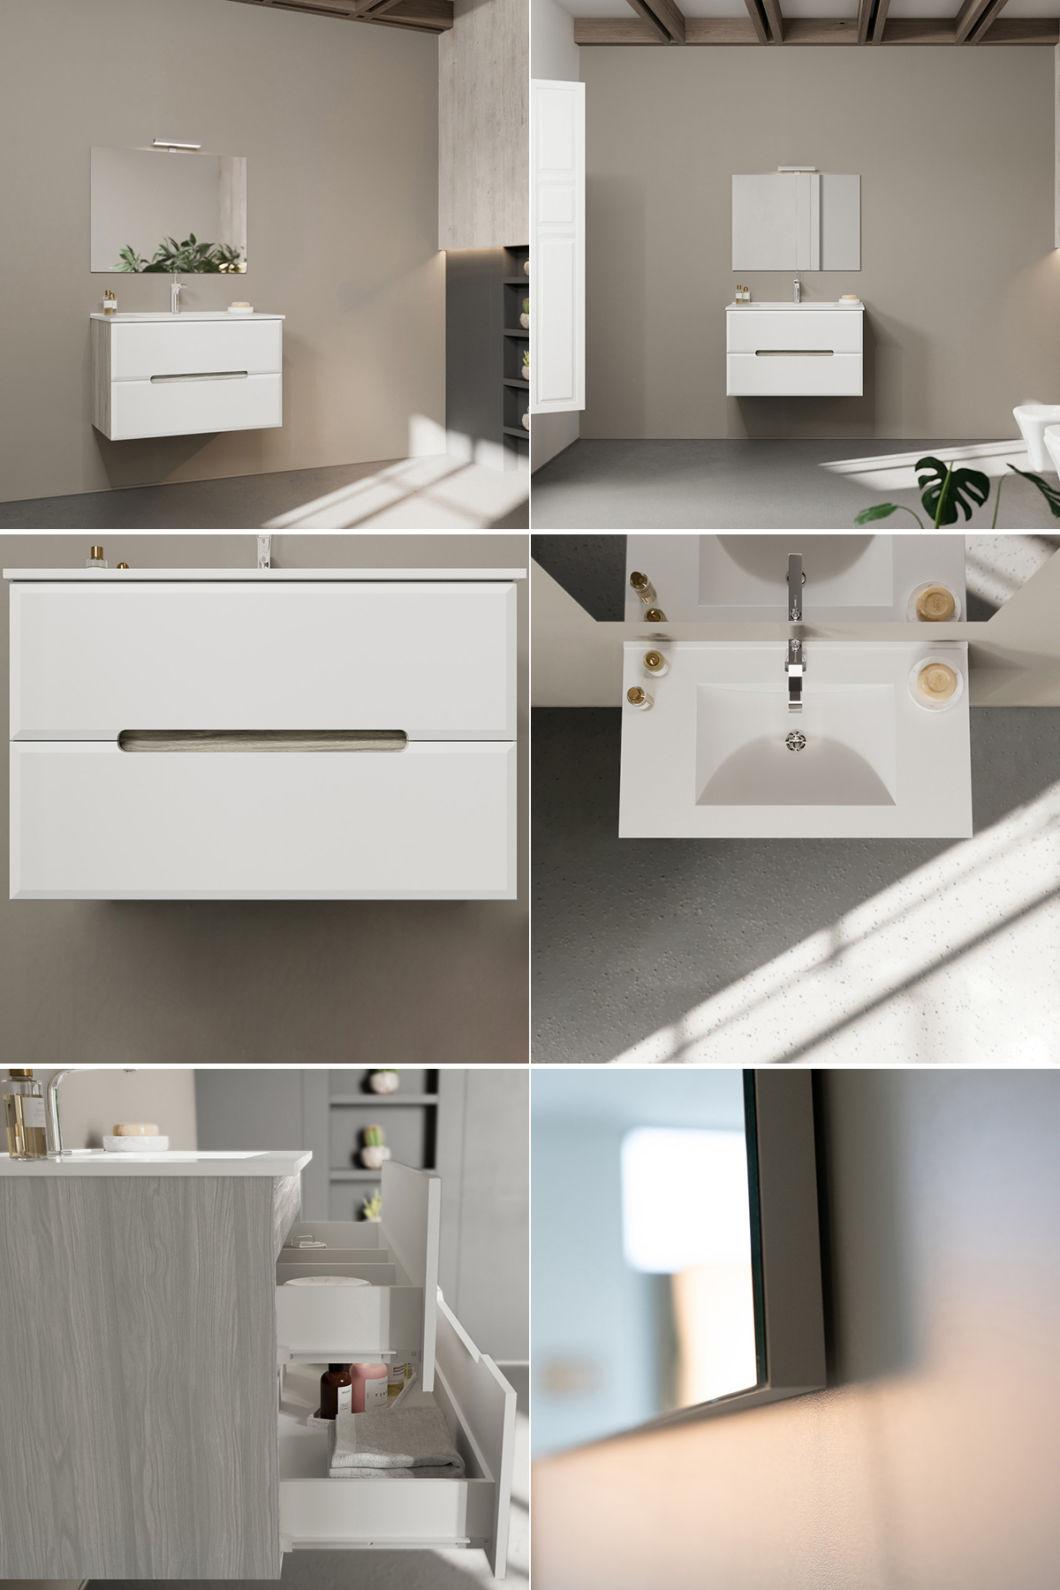 Sp-8445W-800 European Style Bathroom Furniture Wall Mounted Ceramic Wash Basin Vanity Bath Cabinet